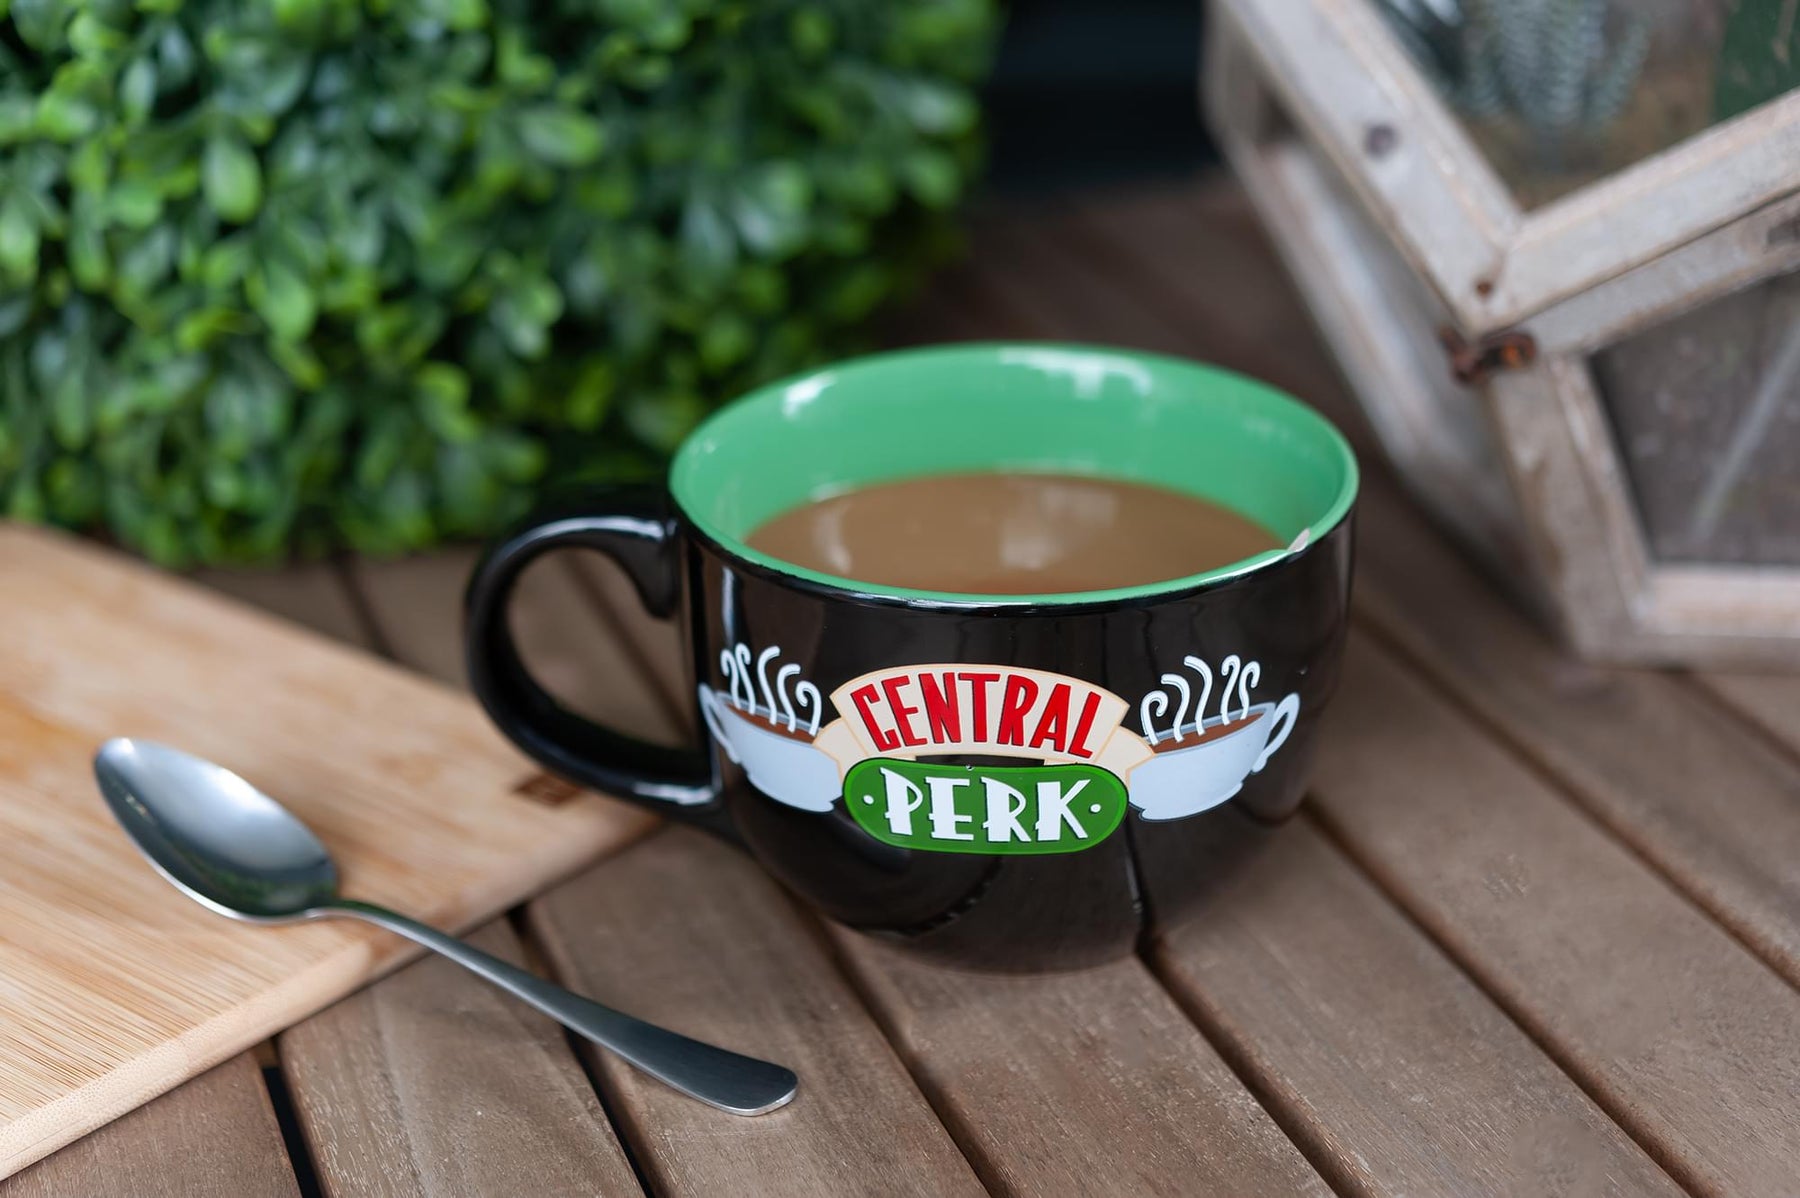 Friends Central Perk Ceramic Mug | Large Mug For Soups & More | Holds 24 Ounces